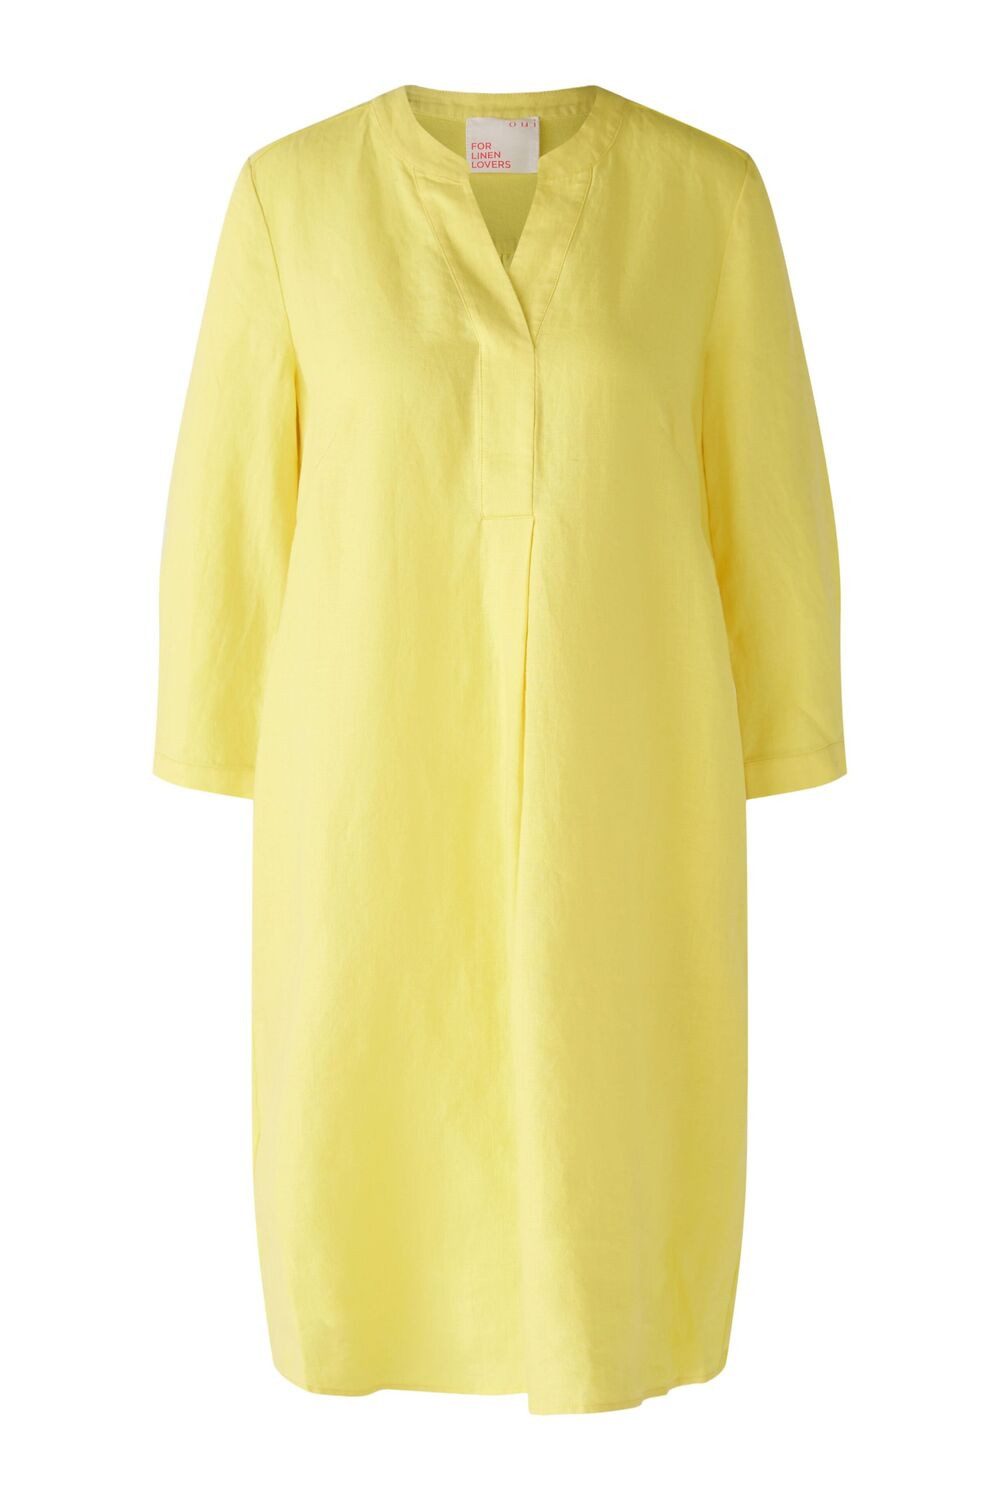 Oui Sommerkleid Kleid, yellow